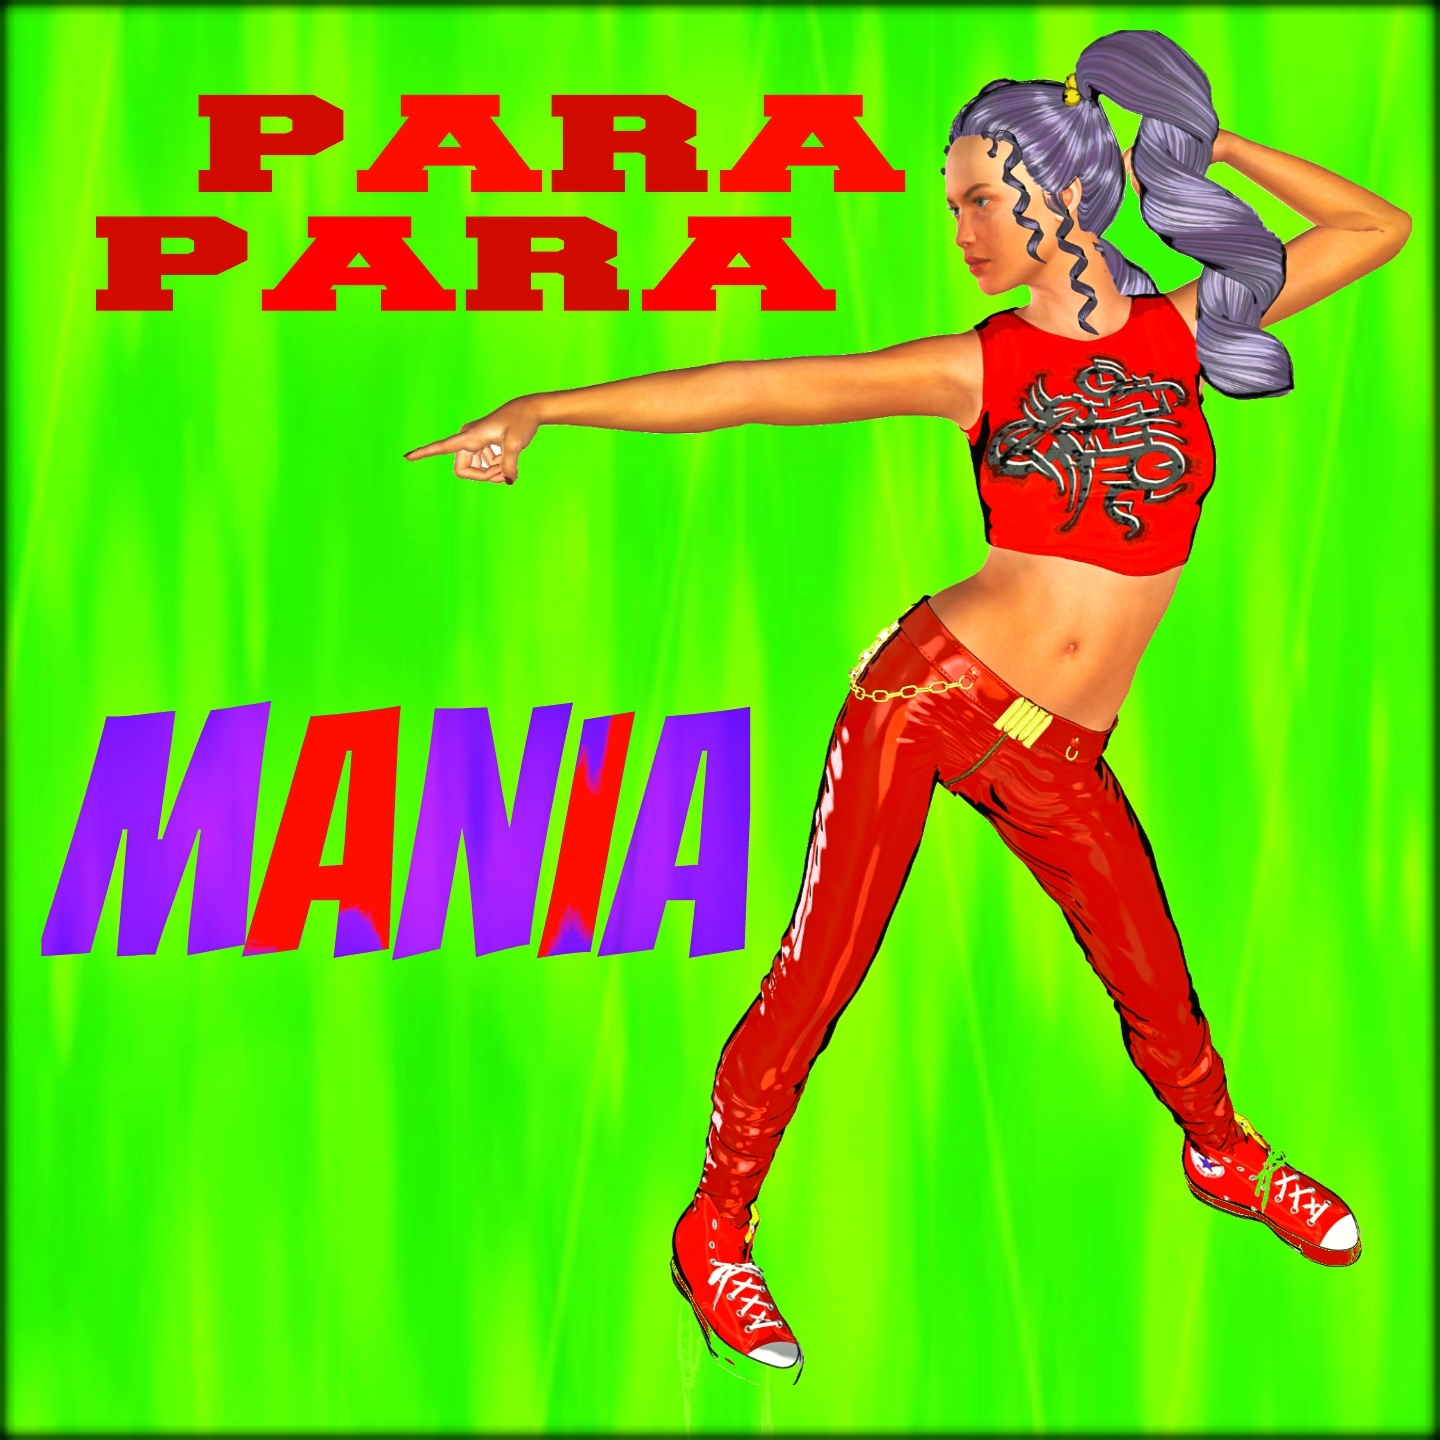 Parapara Mania (Para Para, Eurobeat, Hi Energy)